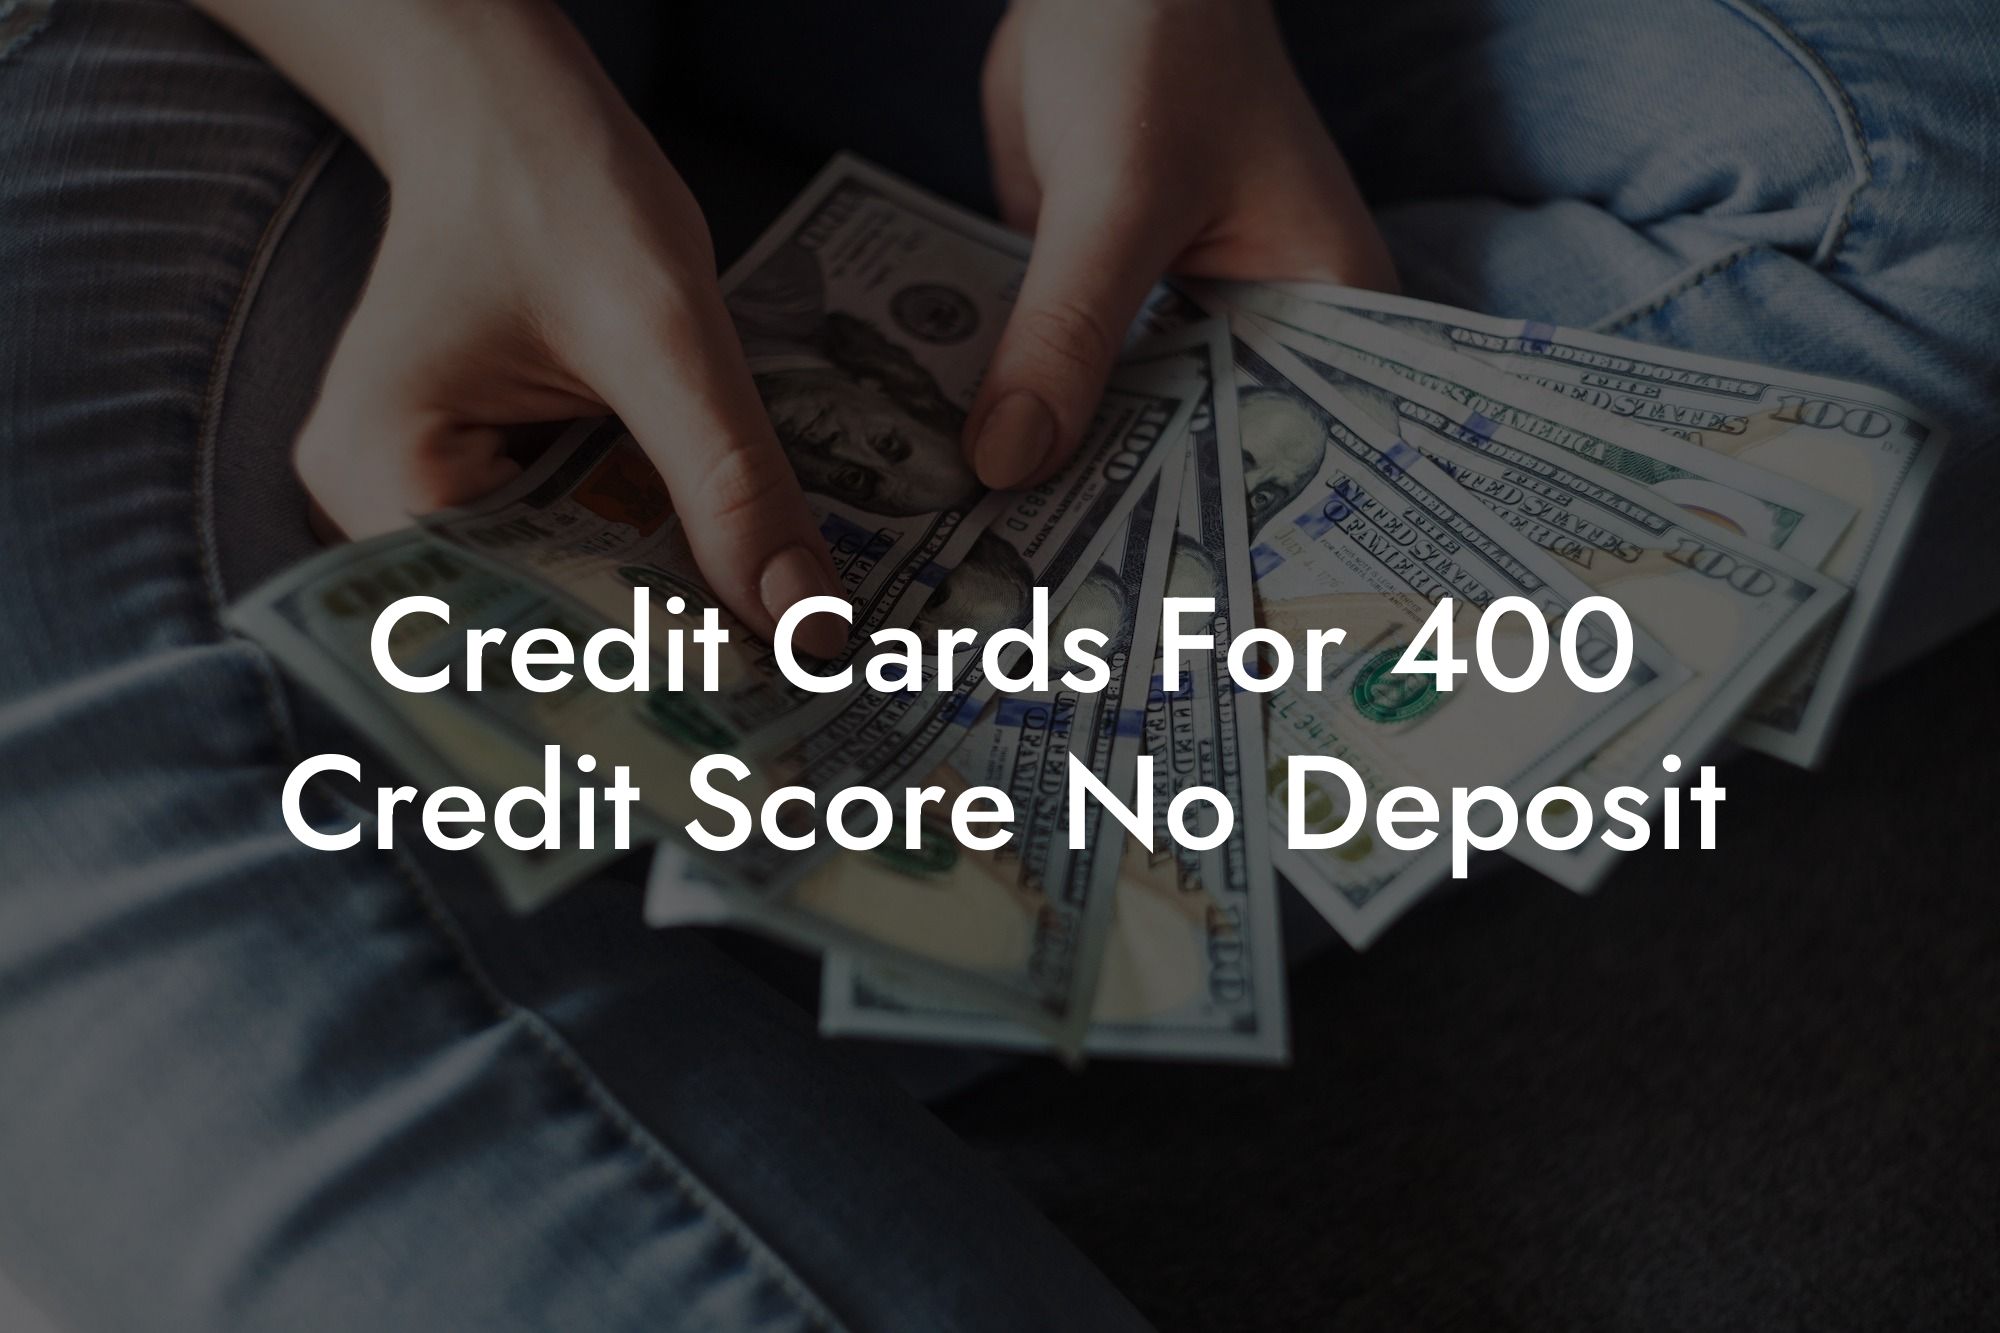 Credit Cards For 400 Credit Score No Deposit